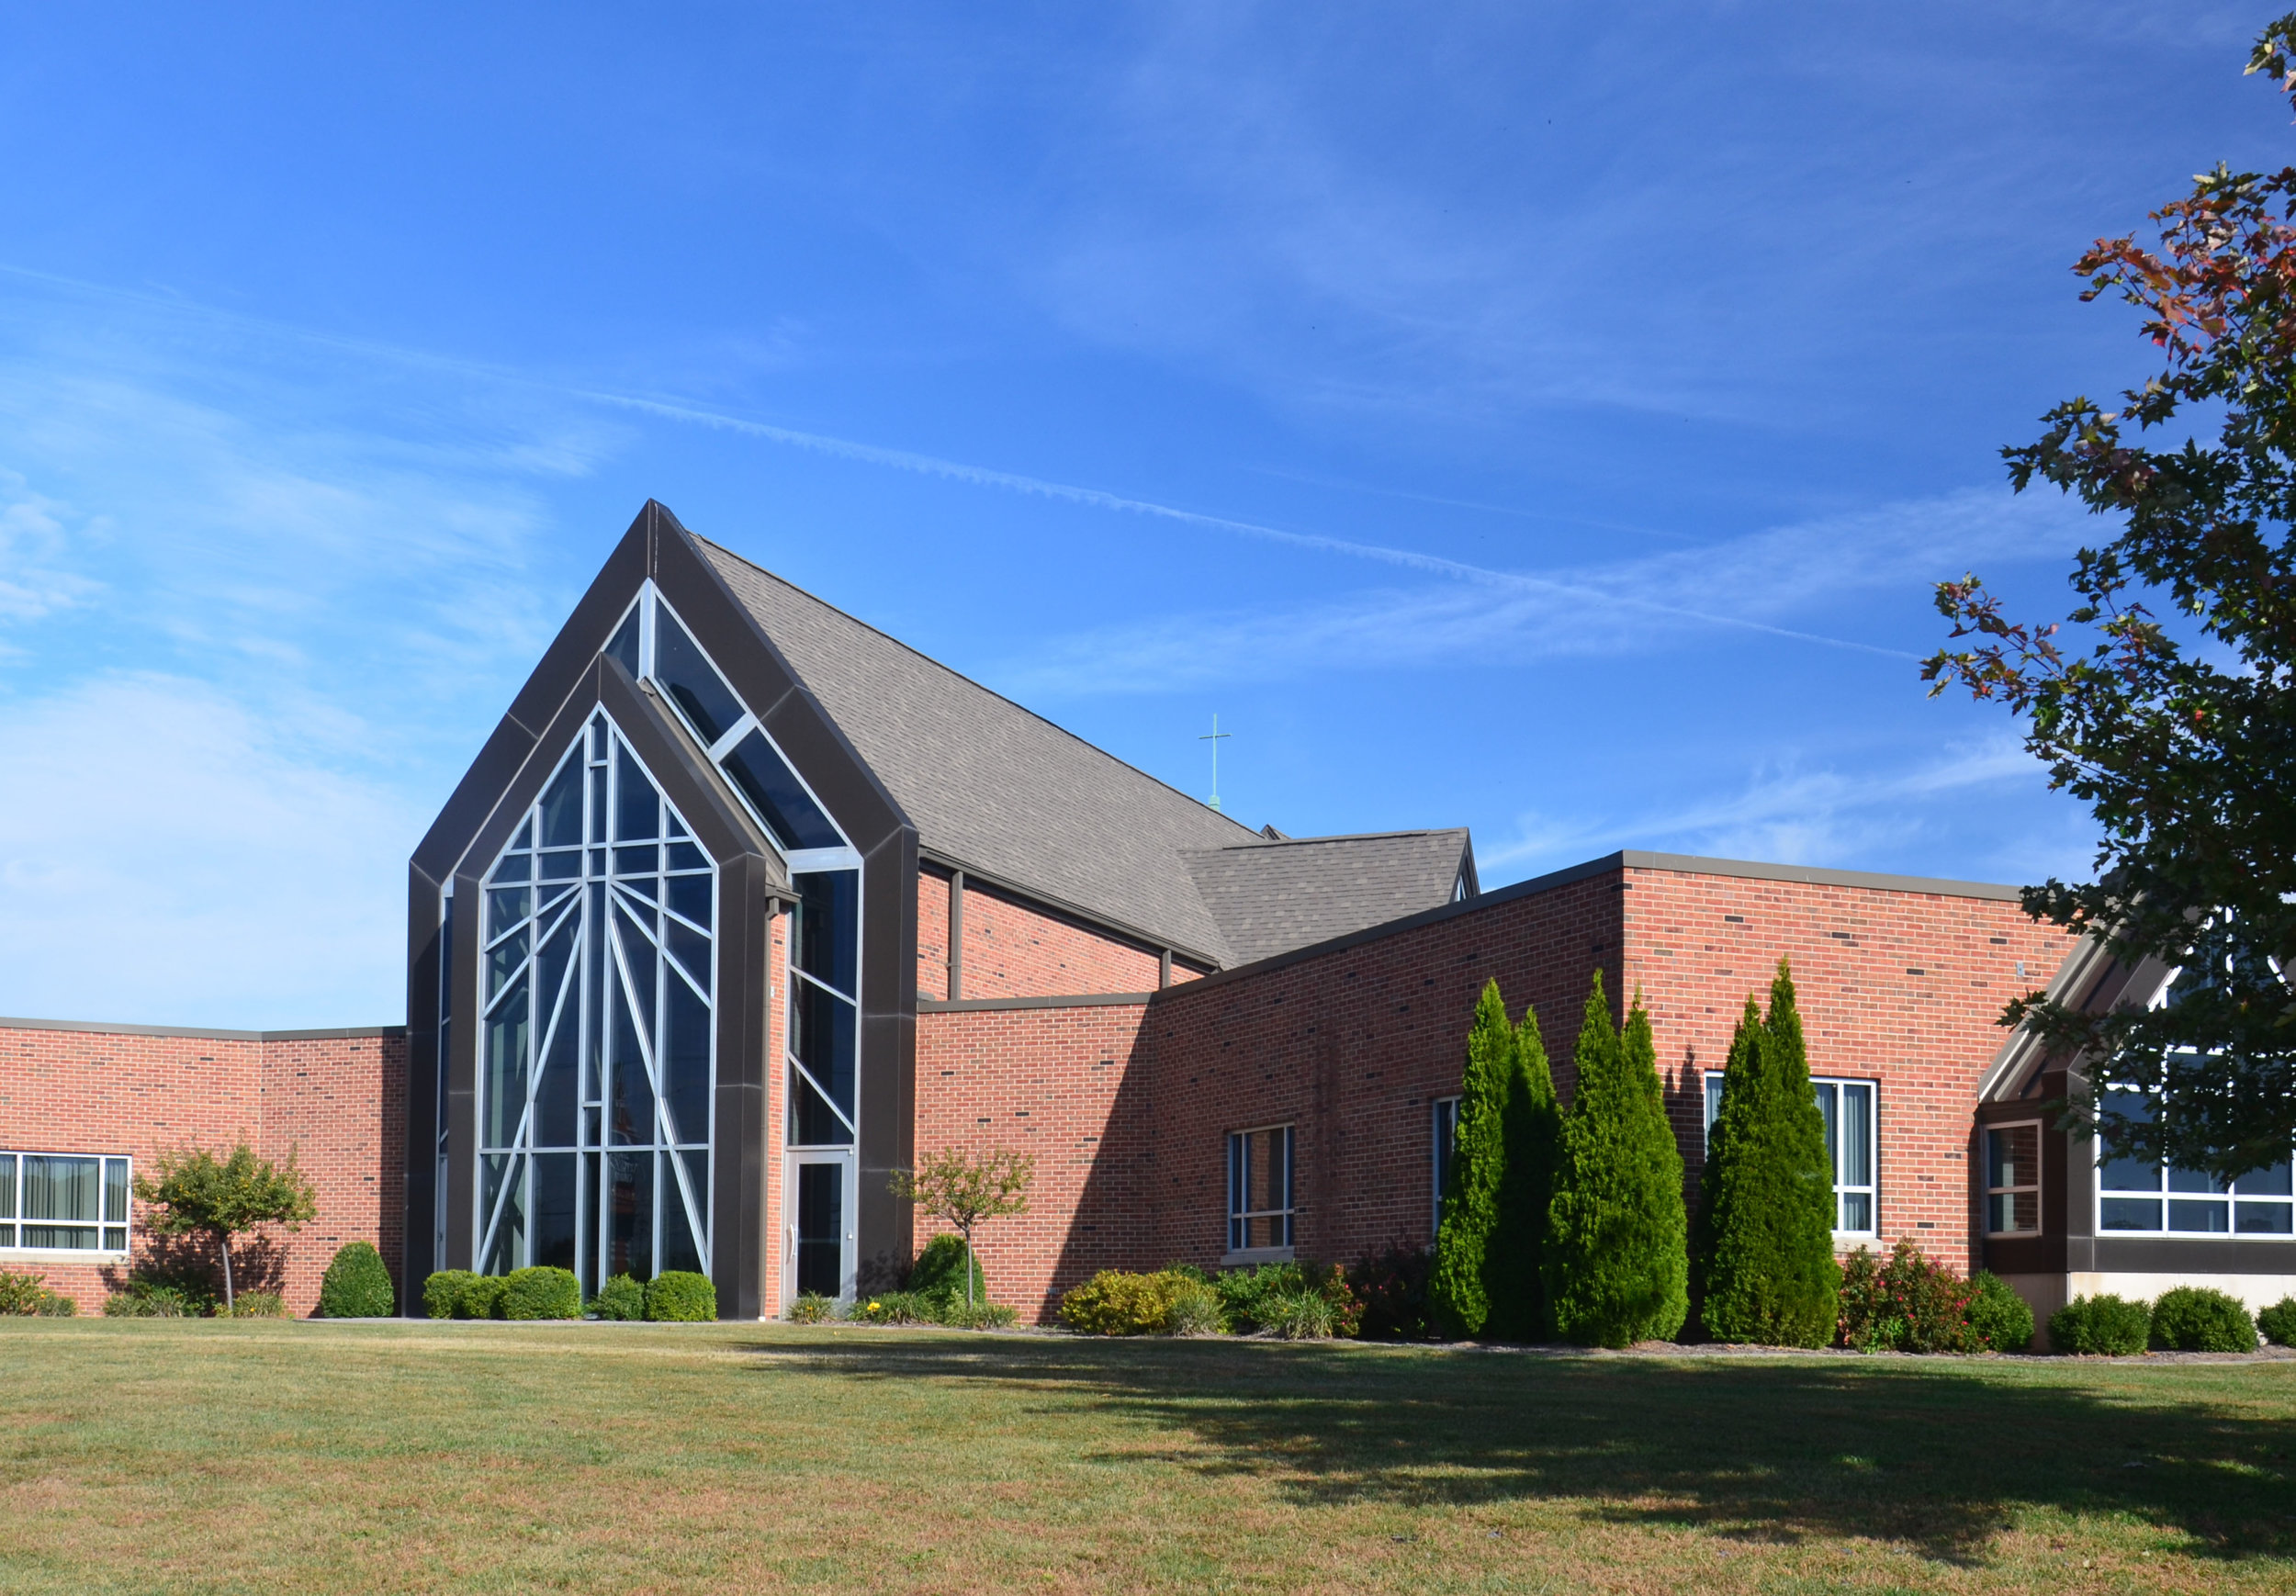 Zion Lutheran Church Exterior (Copy)